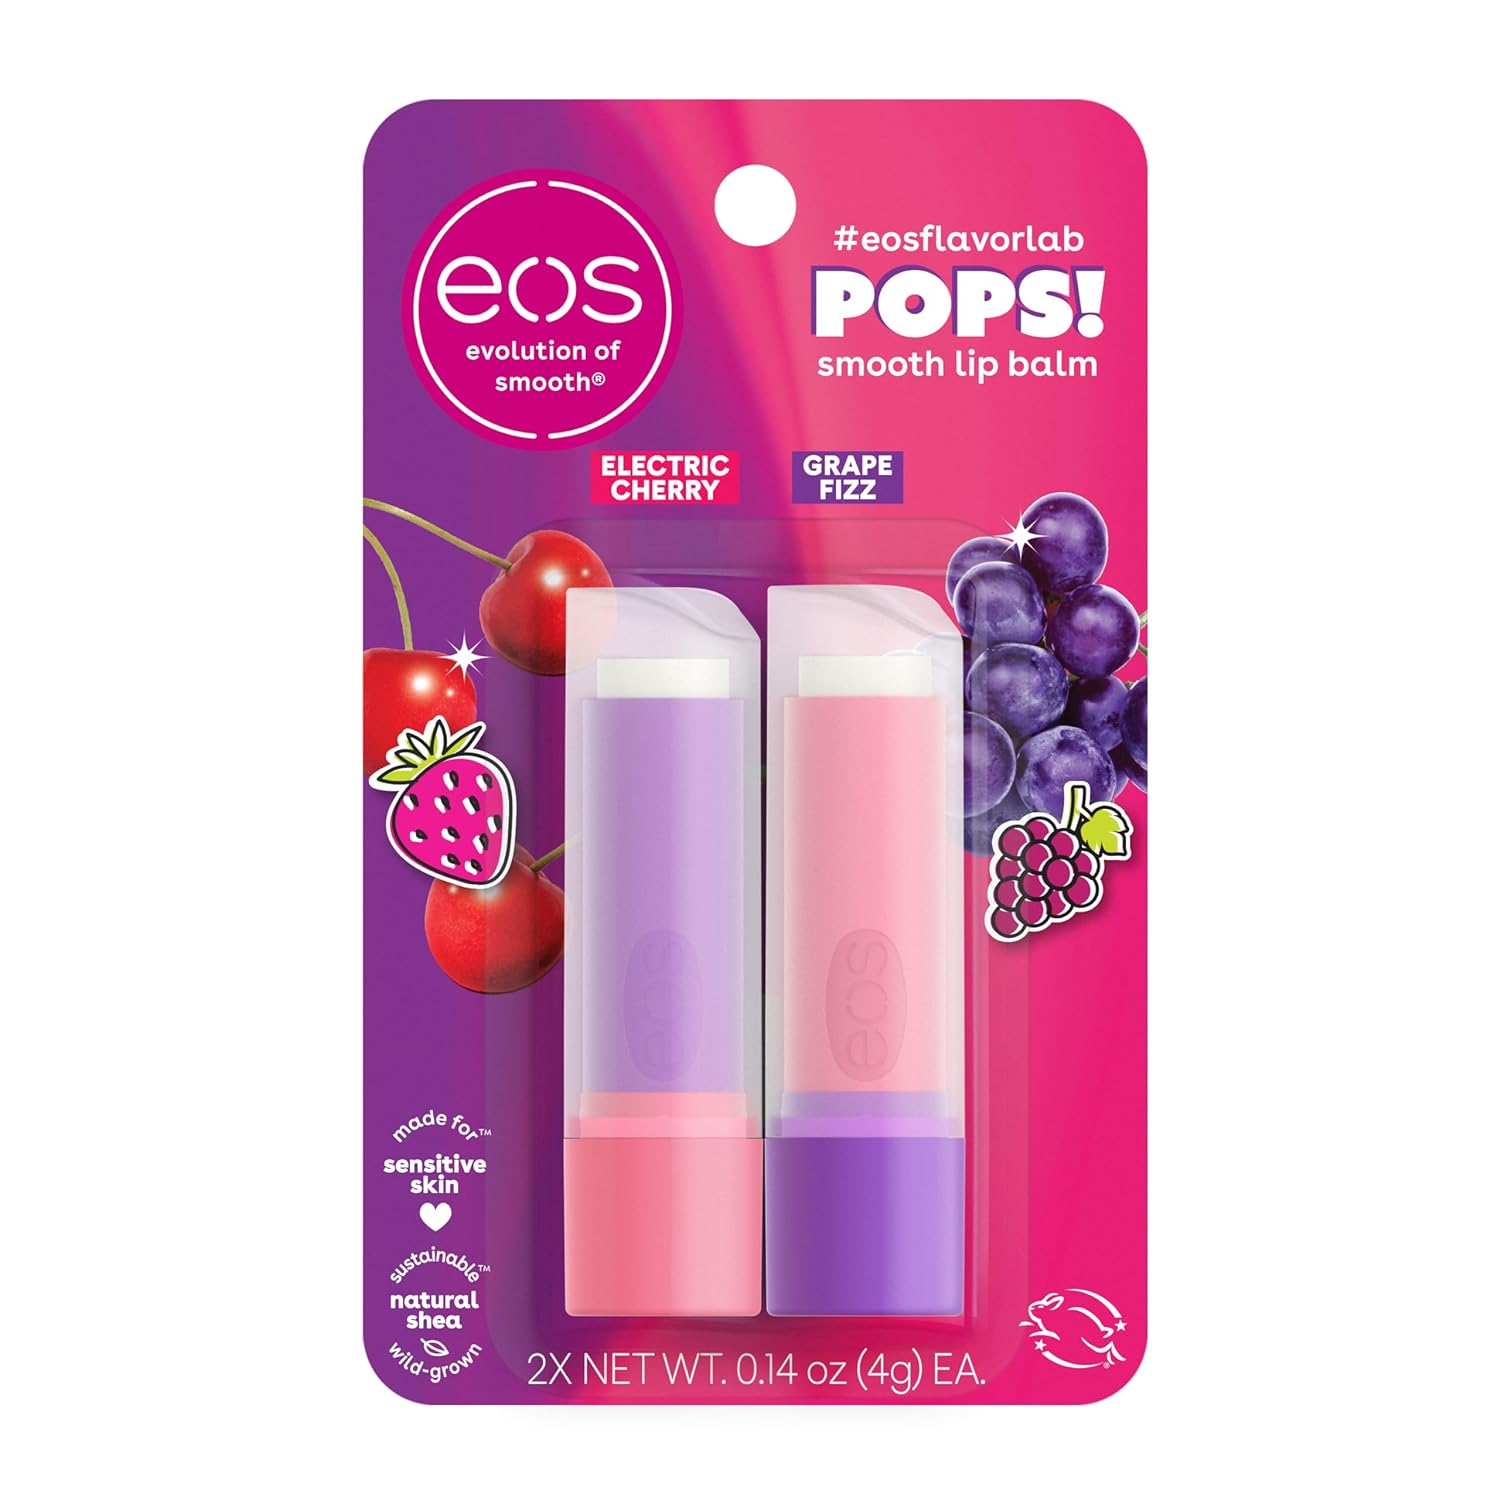 eos FlavorLab Pops! Lip Balm- Electric Cherry & Grape Fizz, Limited-Edition, 0.14 oz, 2-Pack